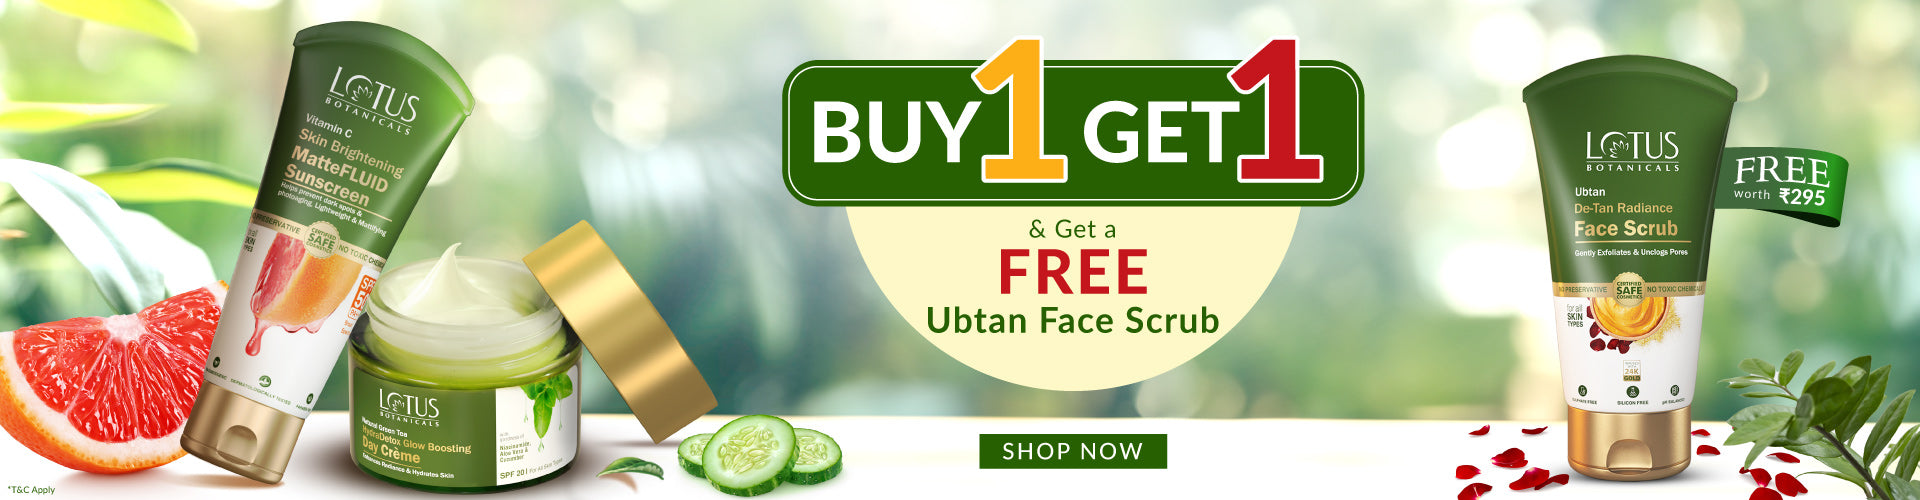 Buy1 Get 1 Free + FREE Ubtan Face Scrub